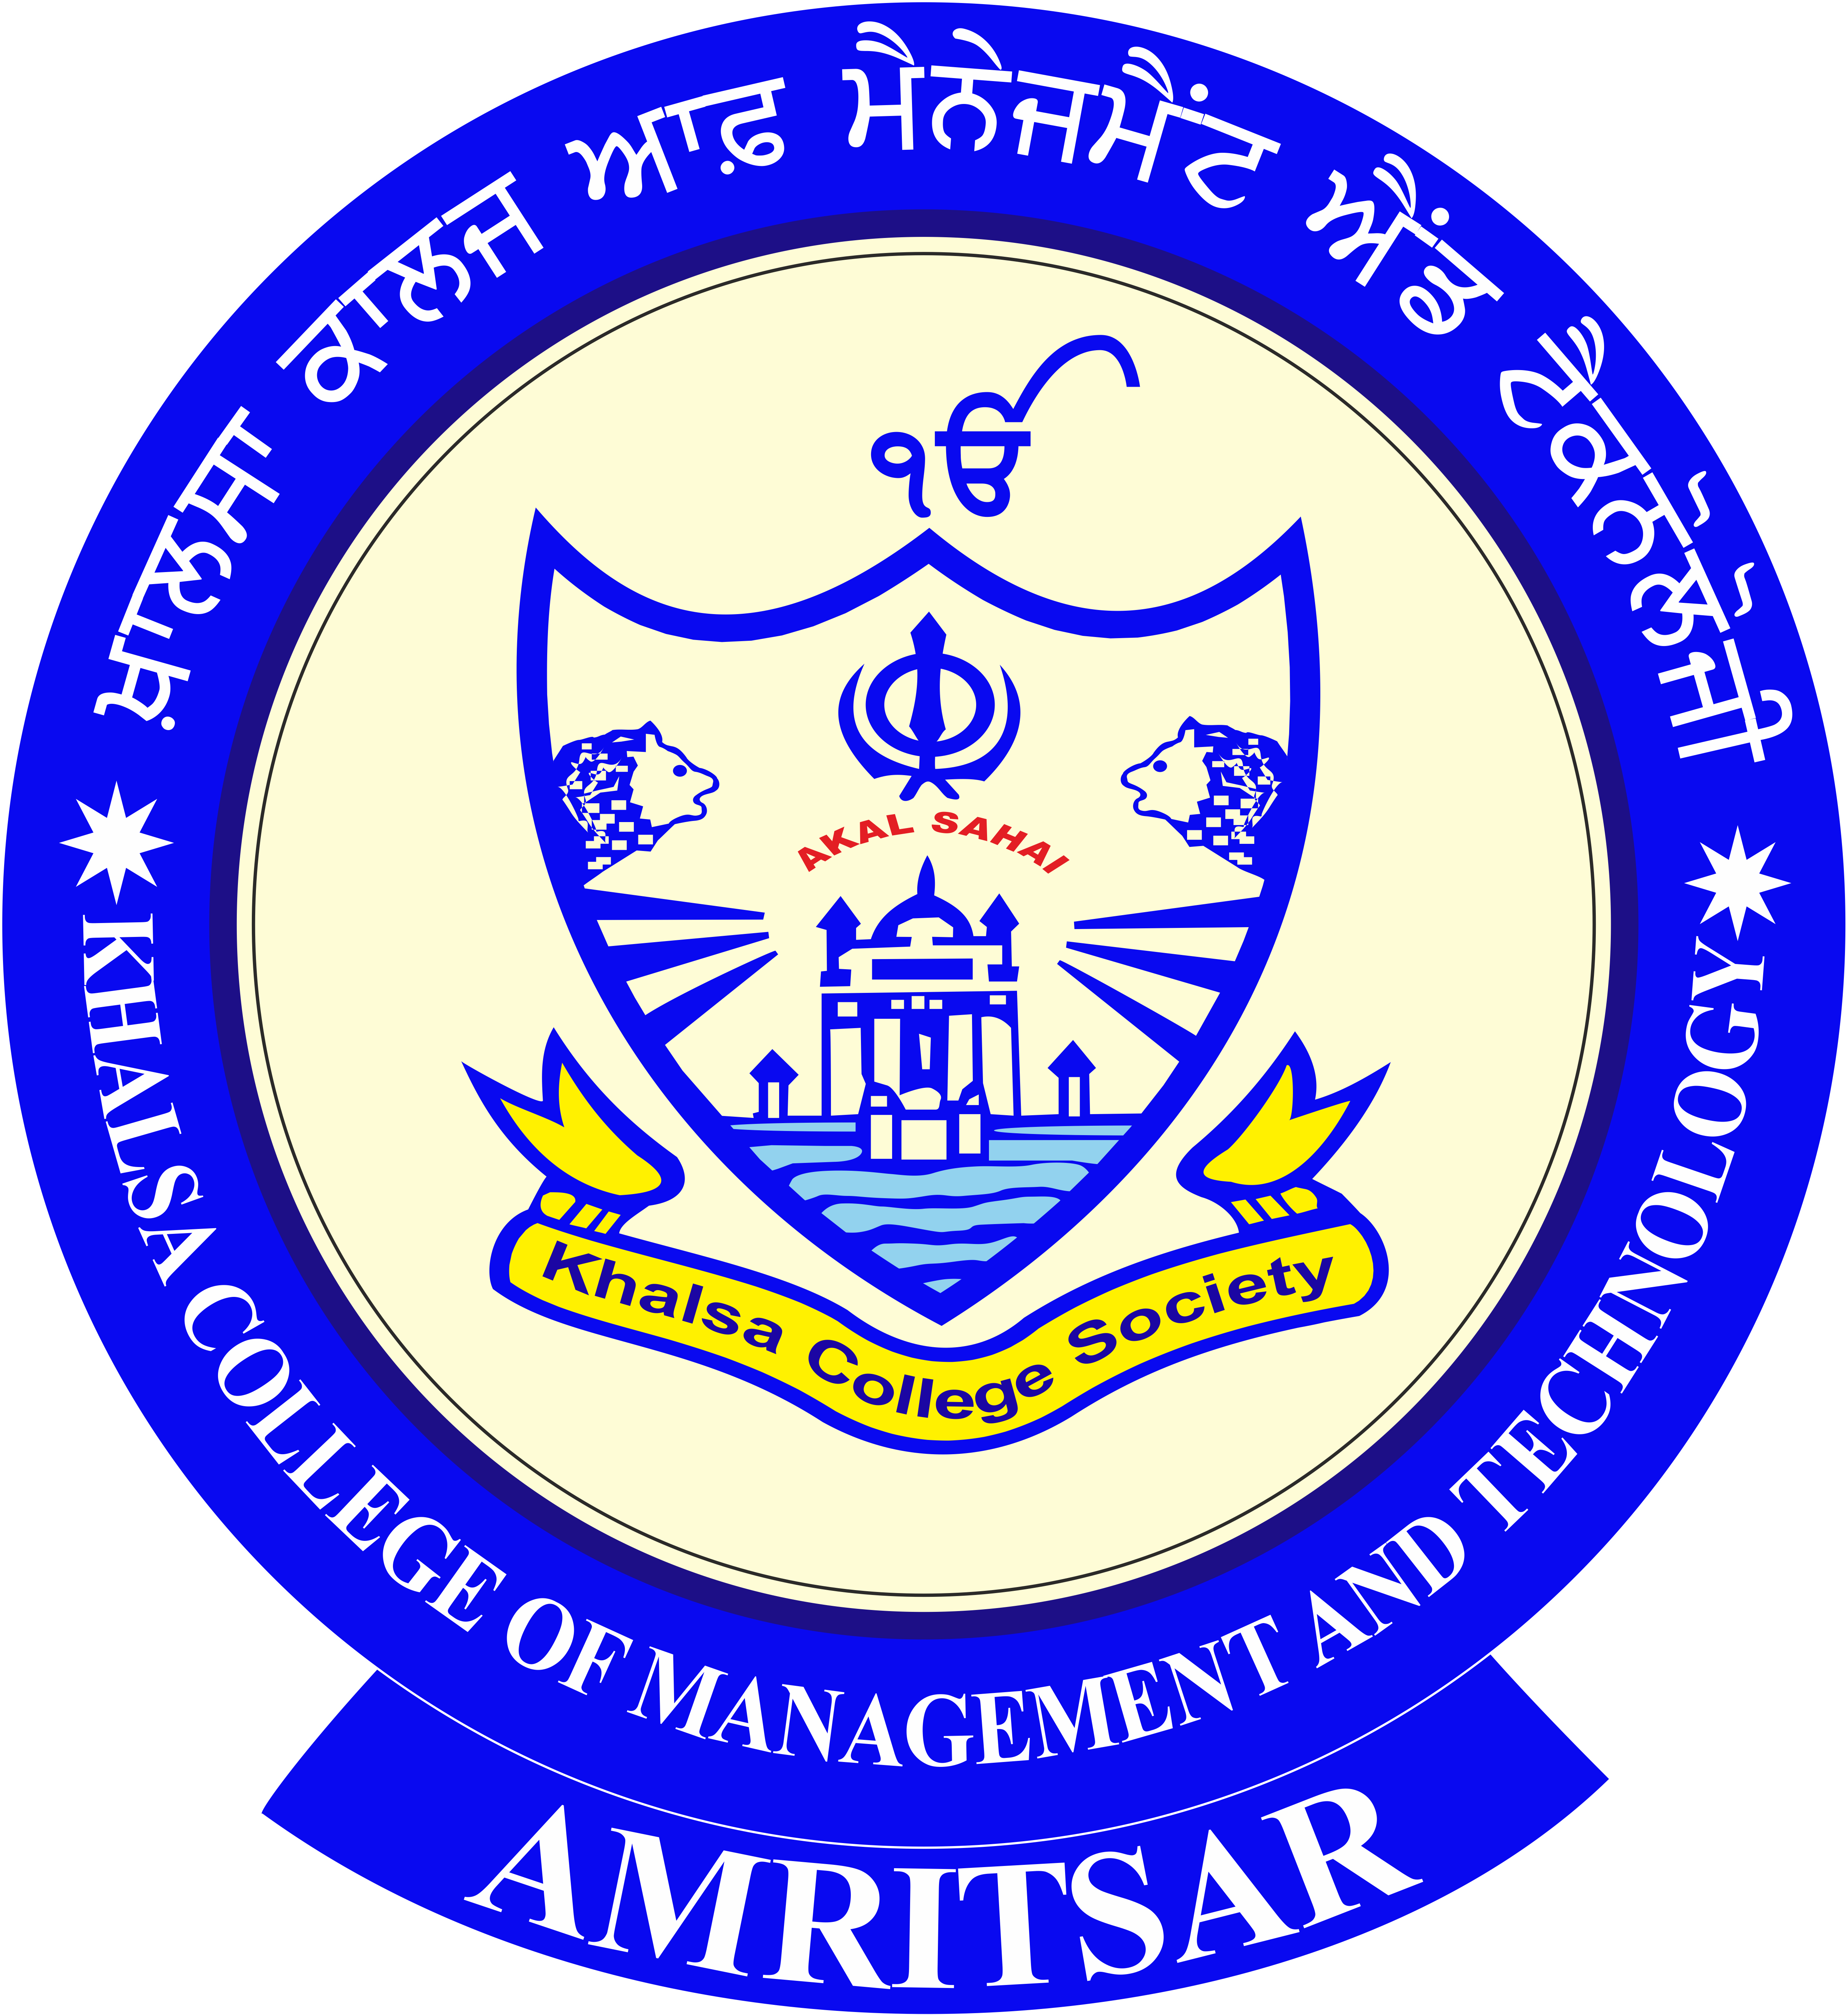 Khalsa College of Management and Technology, Amritsar